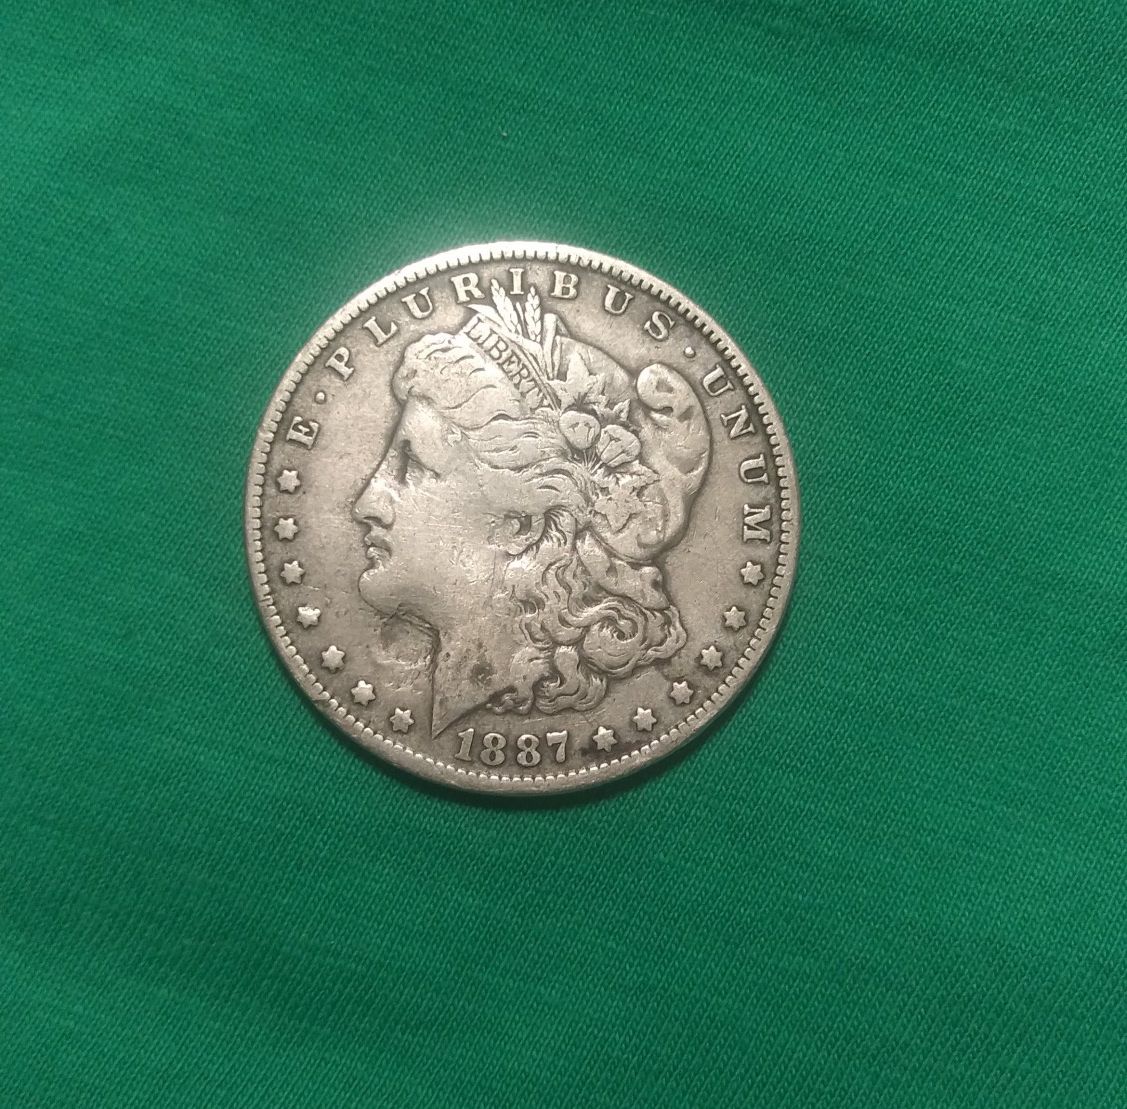 1887 Morgan dollar